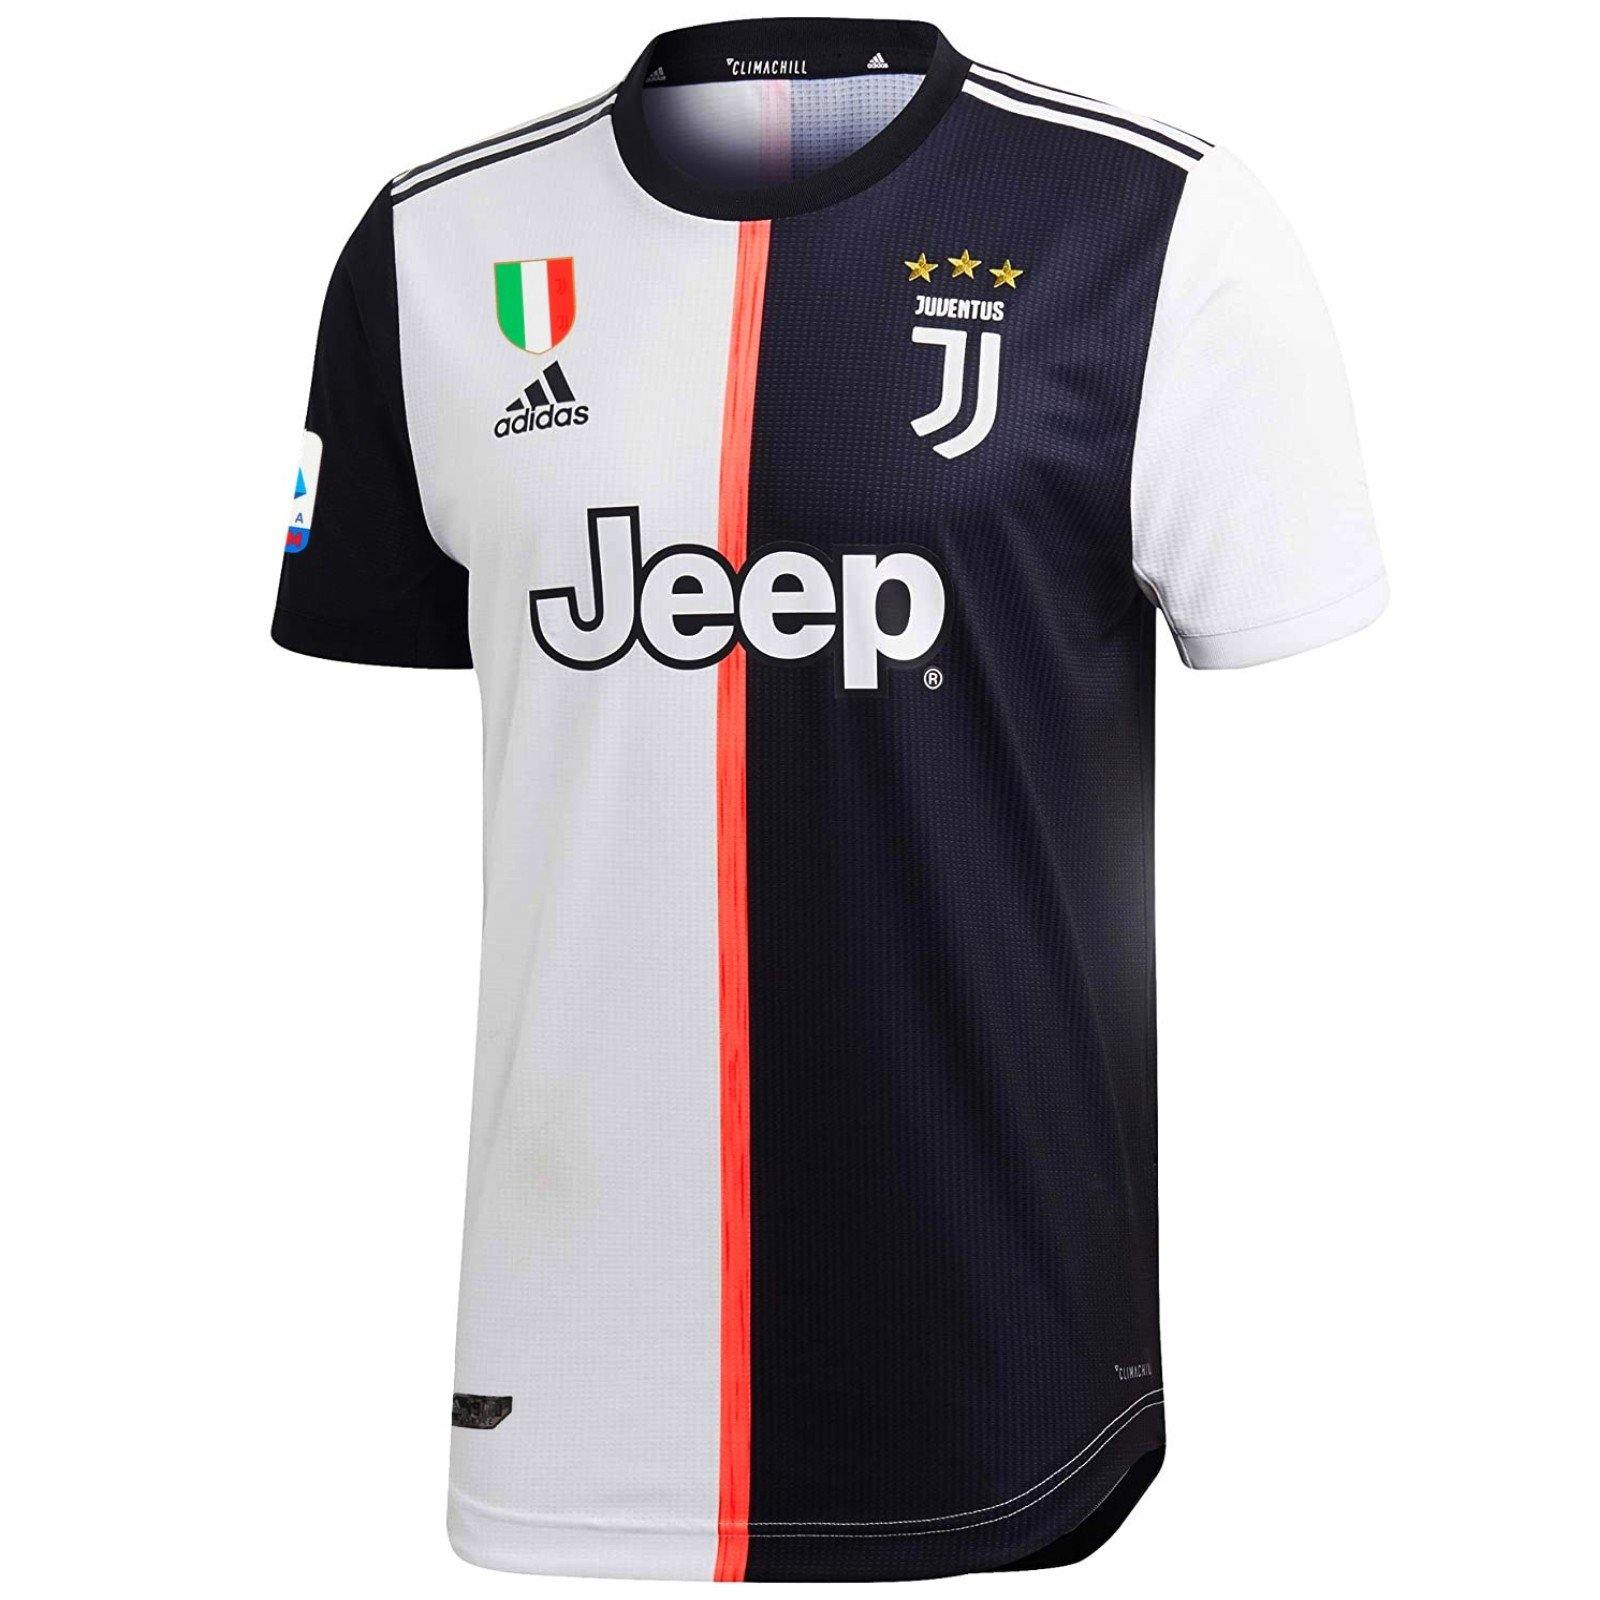 Juventus Ronaldo Home jersey Player Issue 2019/20 Adidas – SoccerTracksuits.com